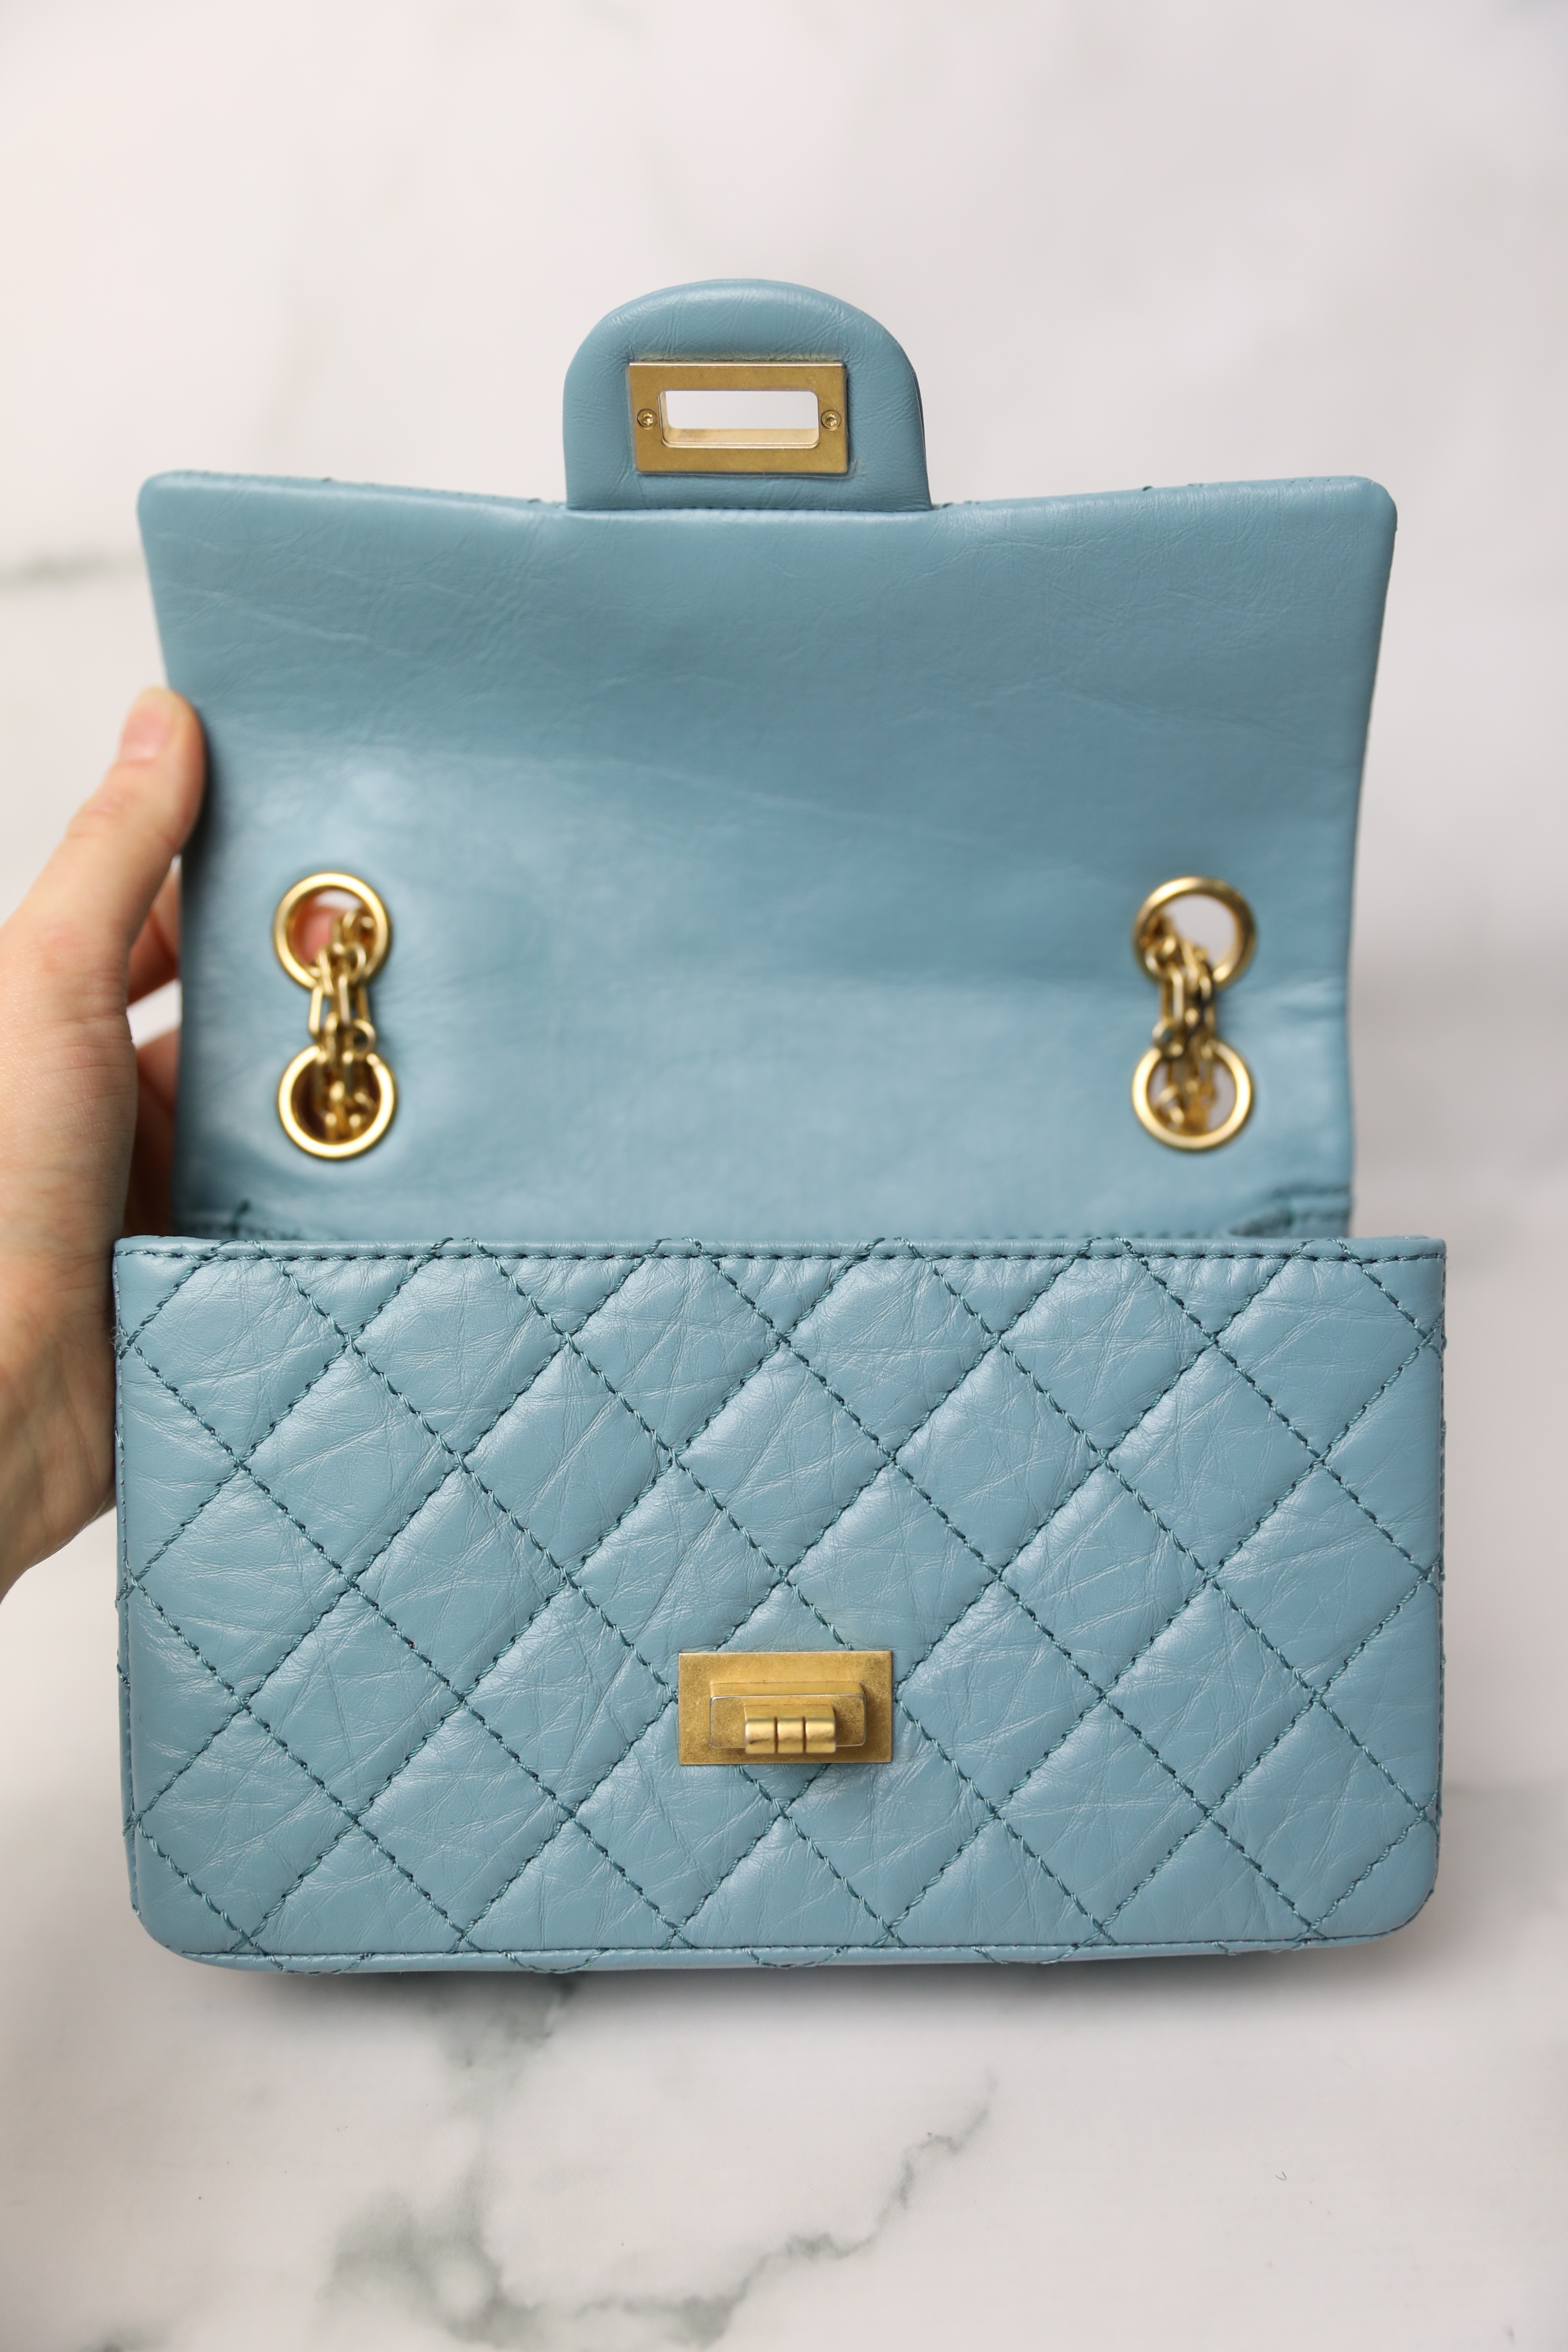 Chanel Reissue Mini, Blue Calfskin with Aged Gold Hardware, New in Box WA001  - Julia Rose Boston